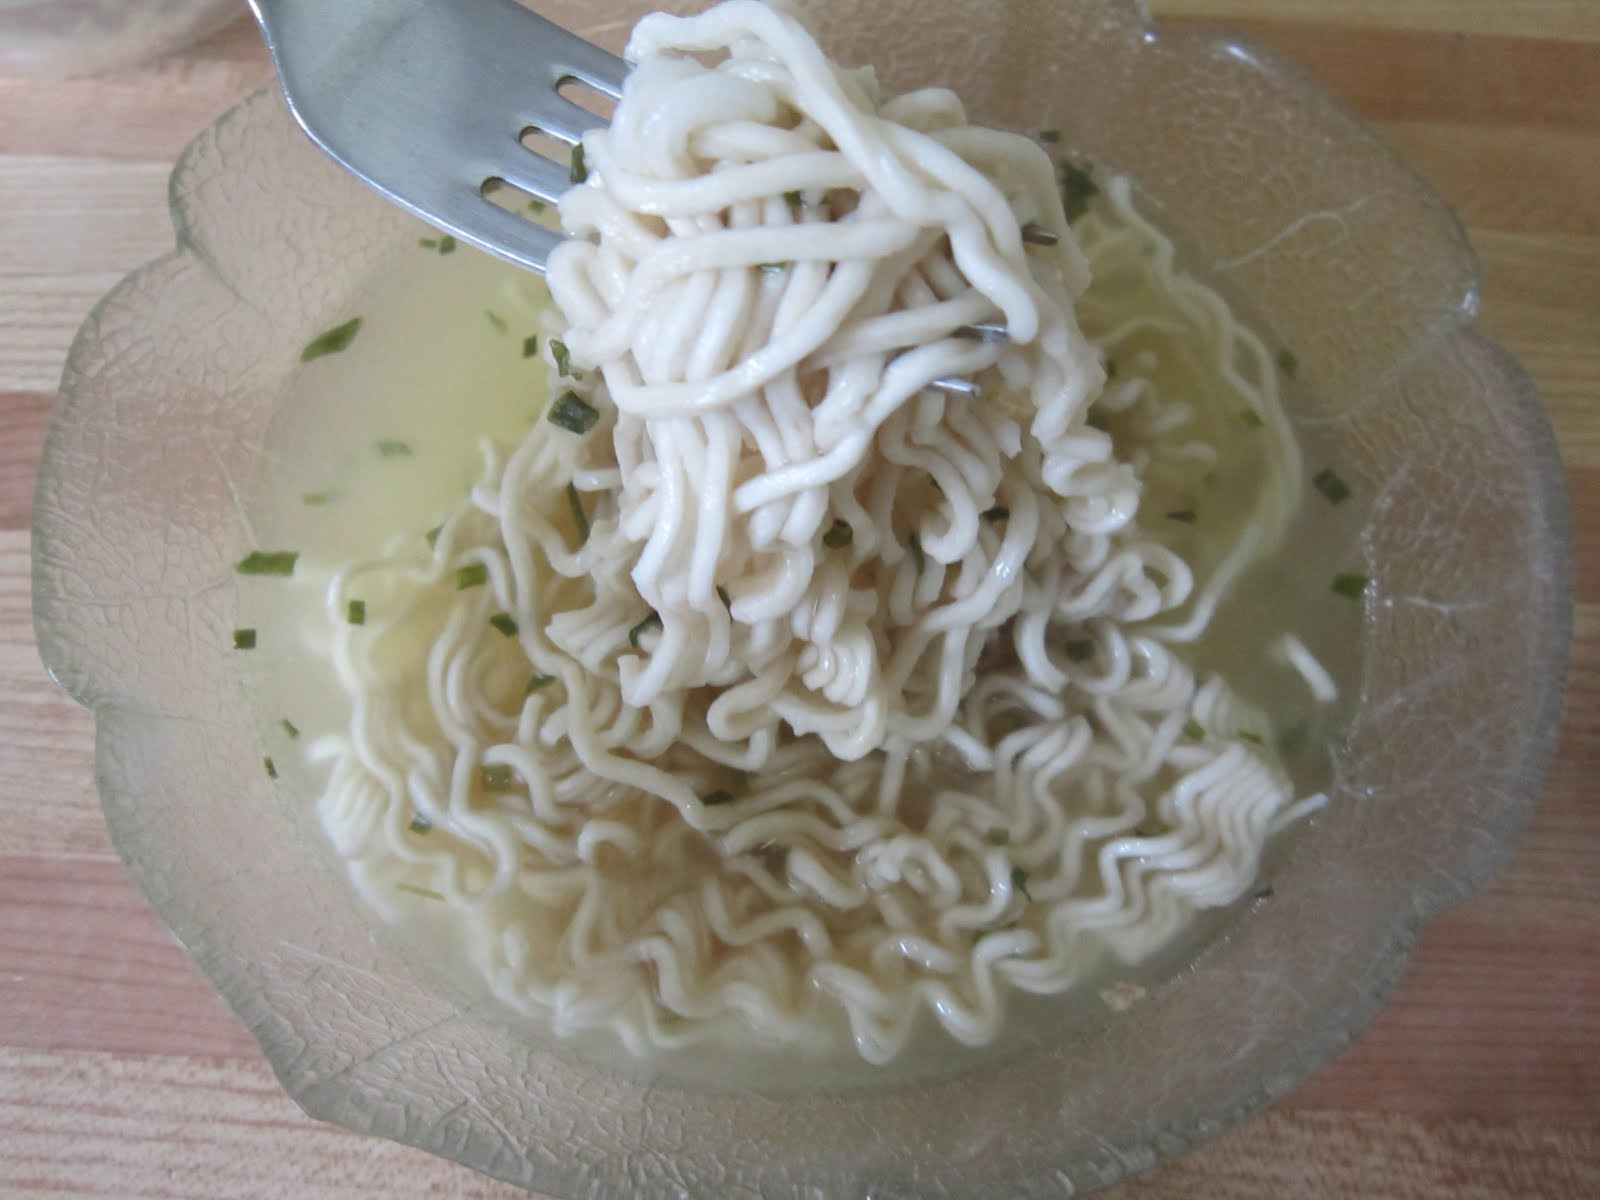 Best ideas about DIY Ramen Seasoning
. Save or Pin Mix It Up Ramen Noodle Seasoning Mix Now.